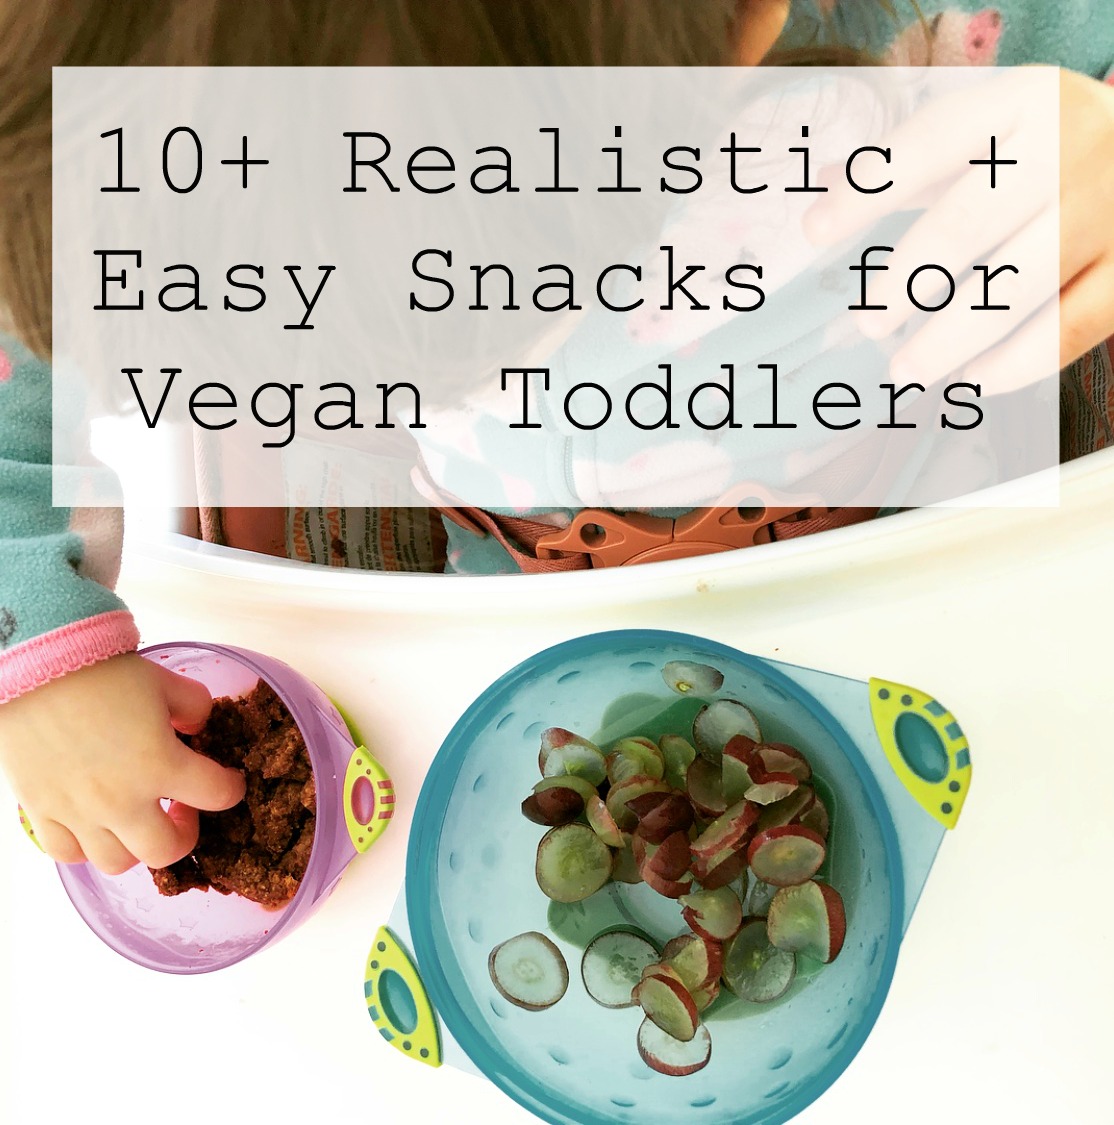 10+ Realistic + Easy Snacks for Vegan Toddlers